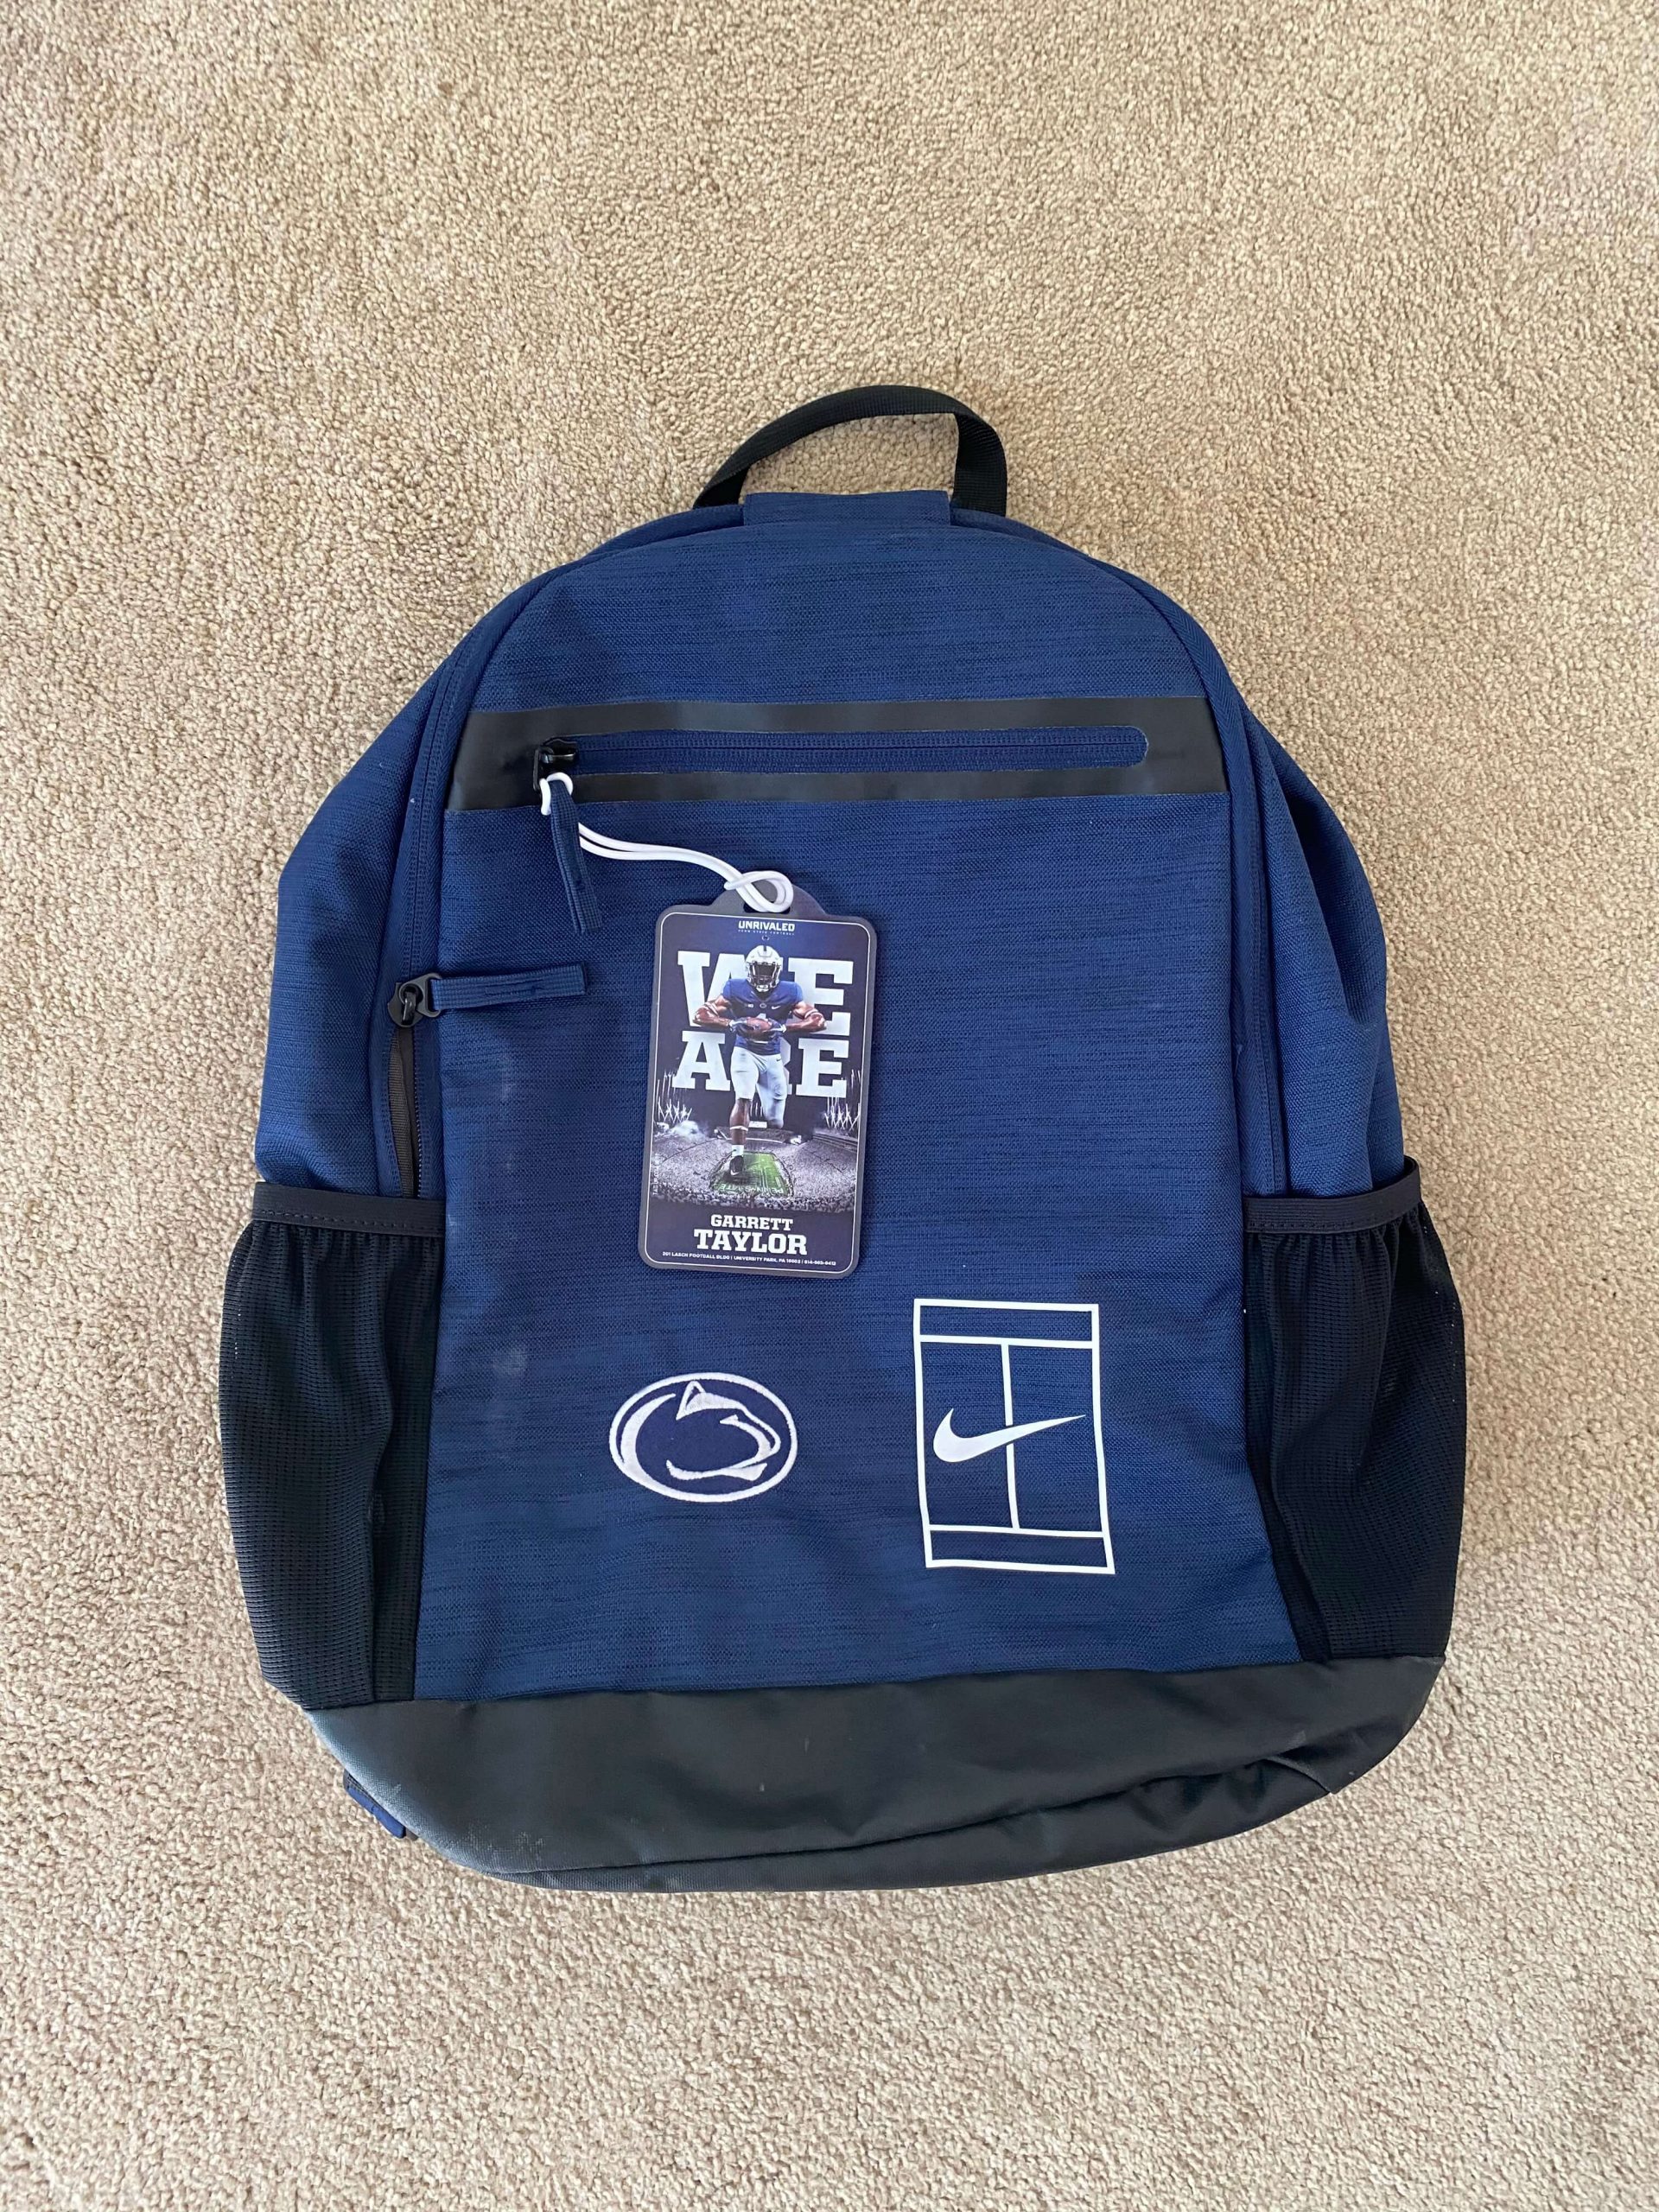 Penn State Football Backpack : NARP Clothing